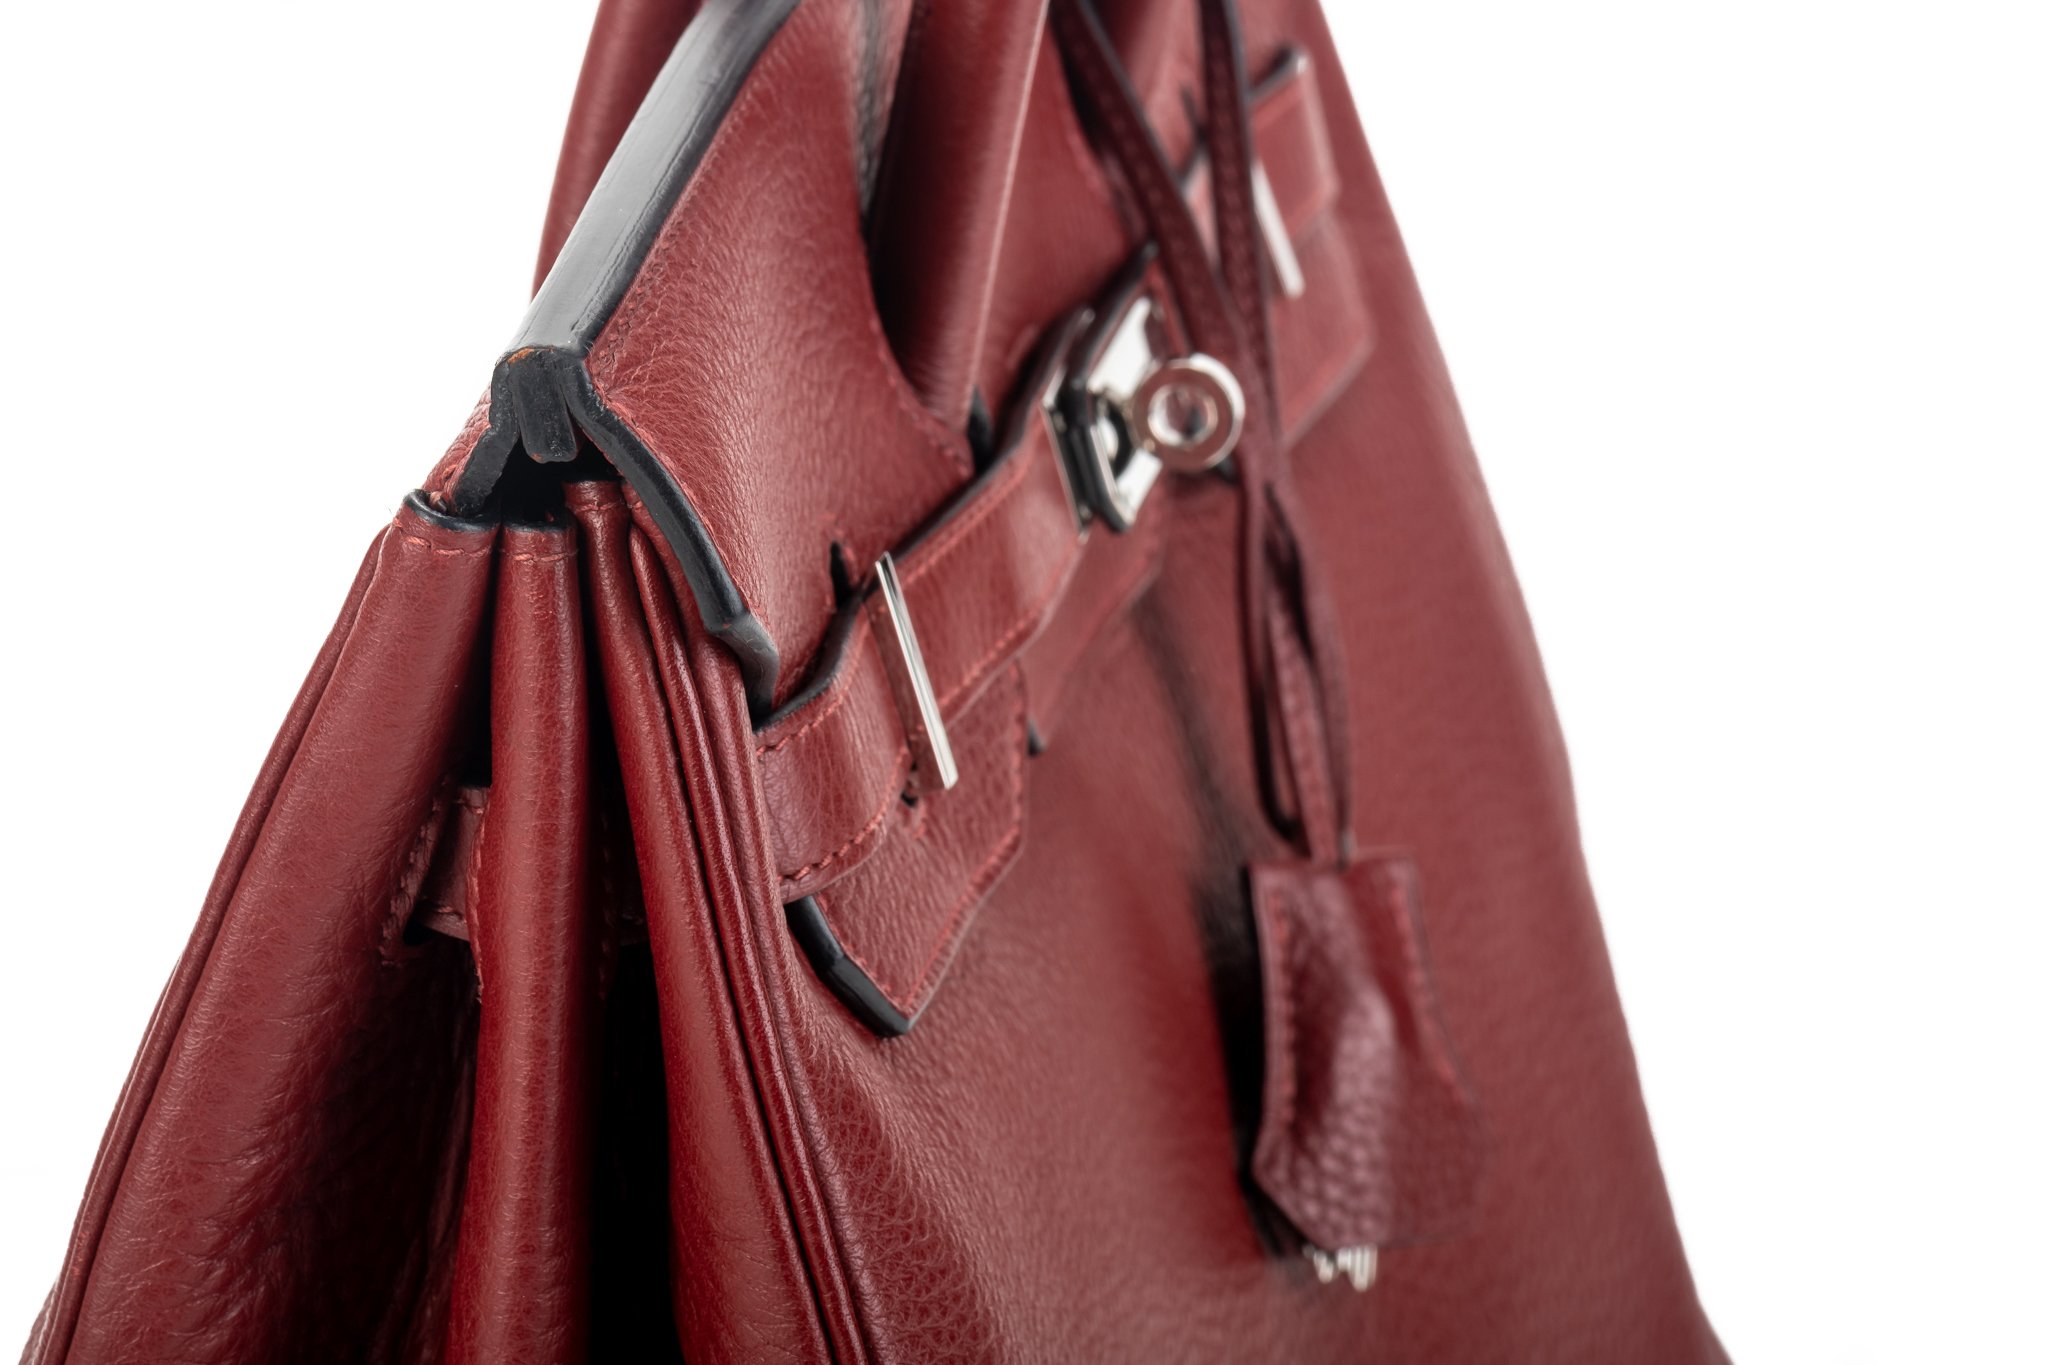 Hermes Birkin Handbag Red Clemence with Palladium Hardware 30 Red 213721178